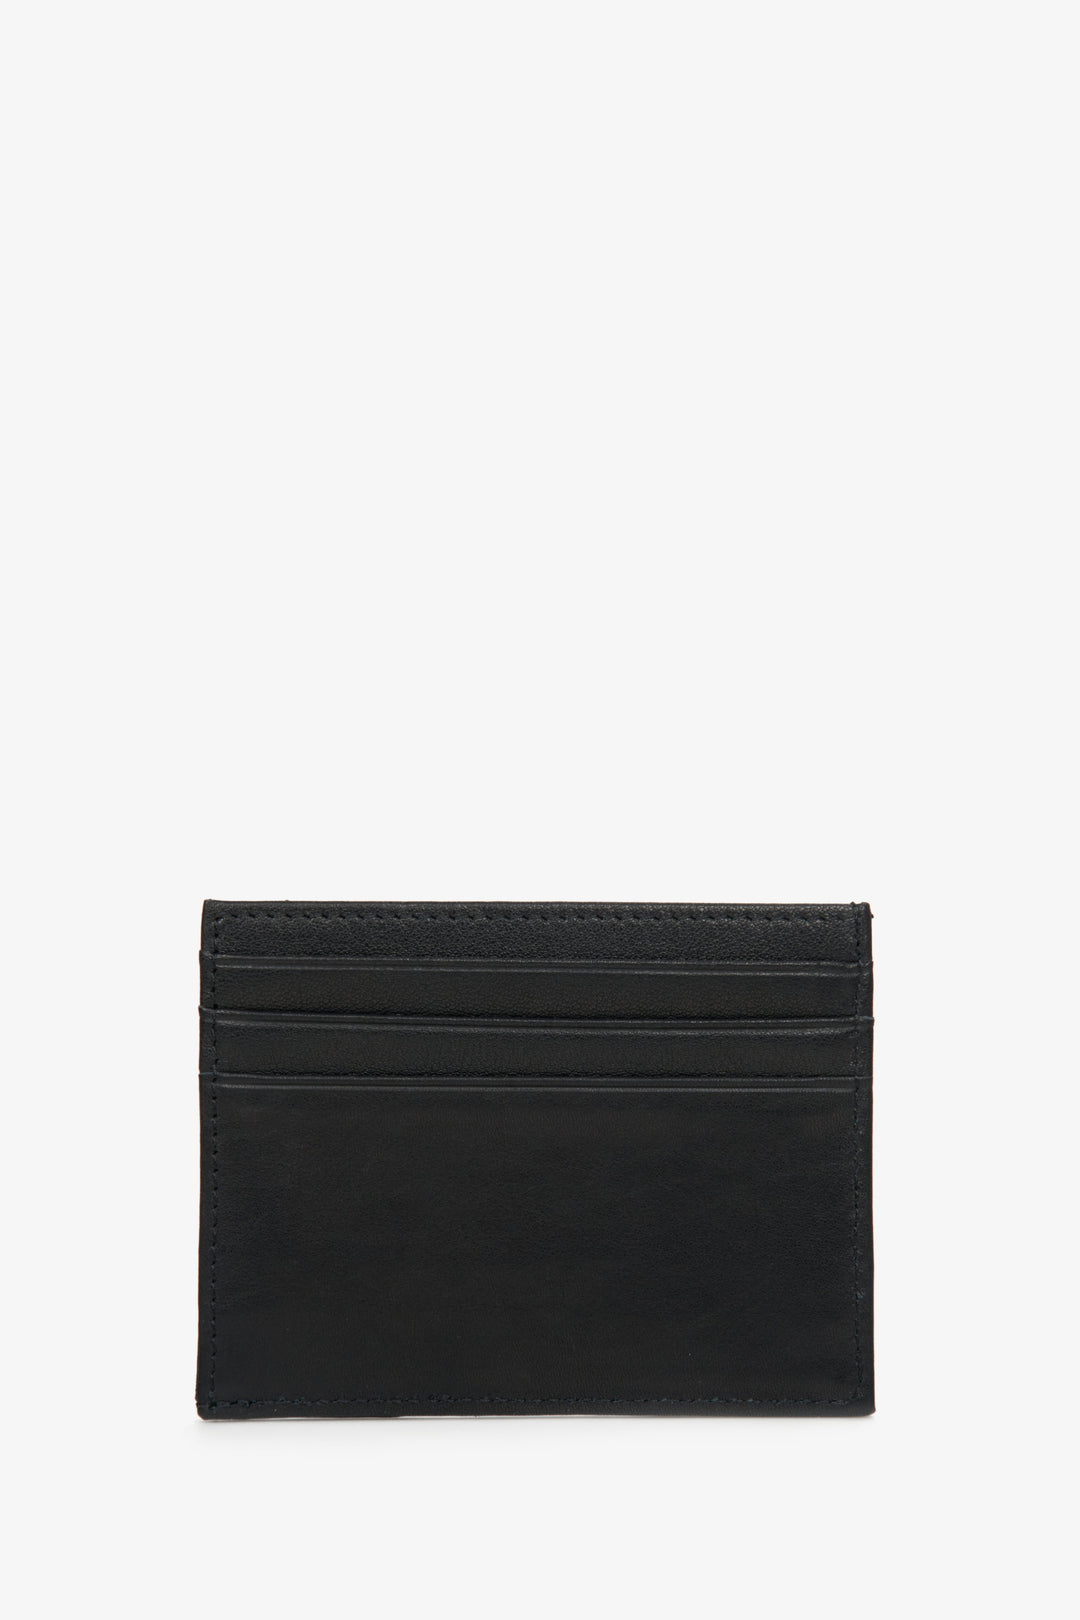 Men's black leather document wallet.